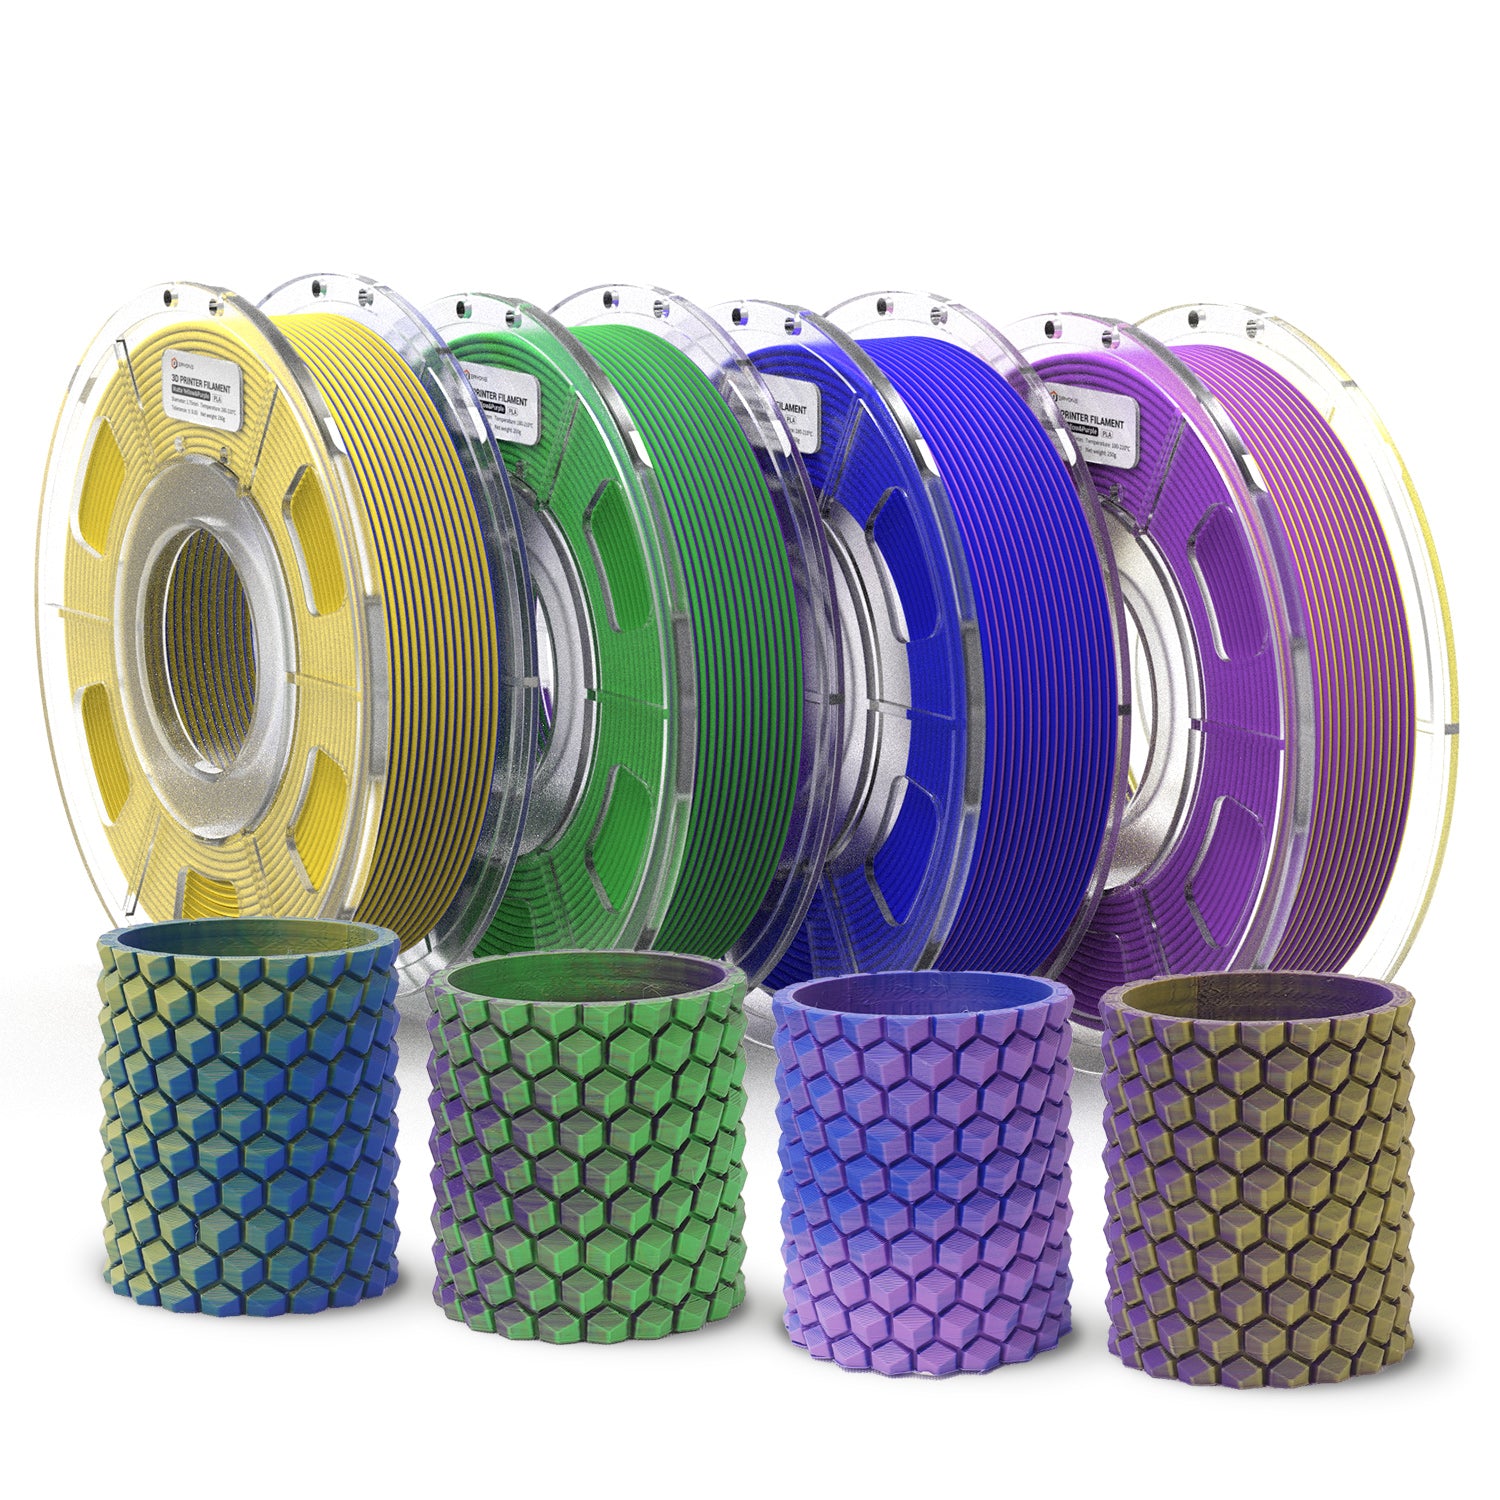 US ONLY] ERYONE PLA Filament 1kg 1.75mm Various Colors For FDM 3D Printers